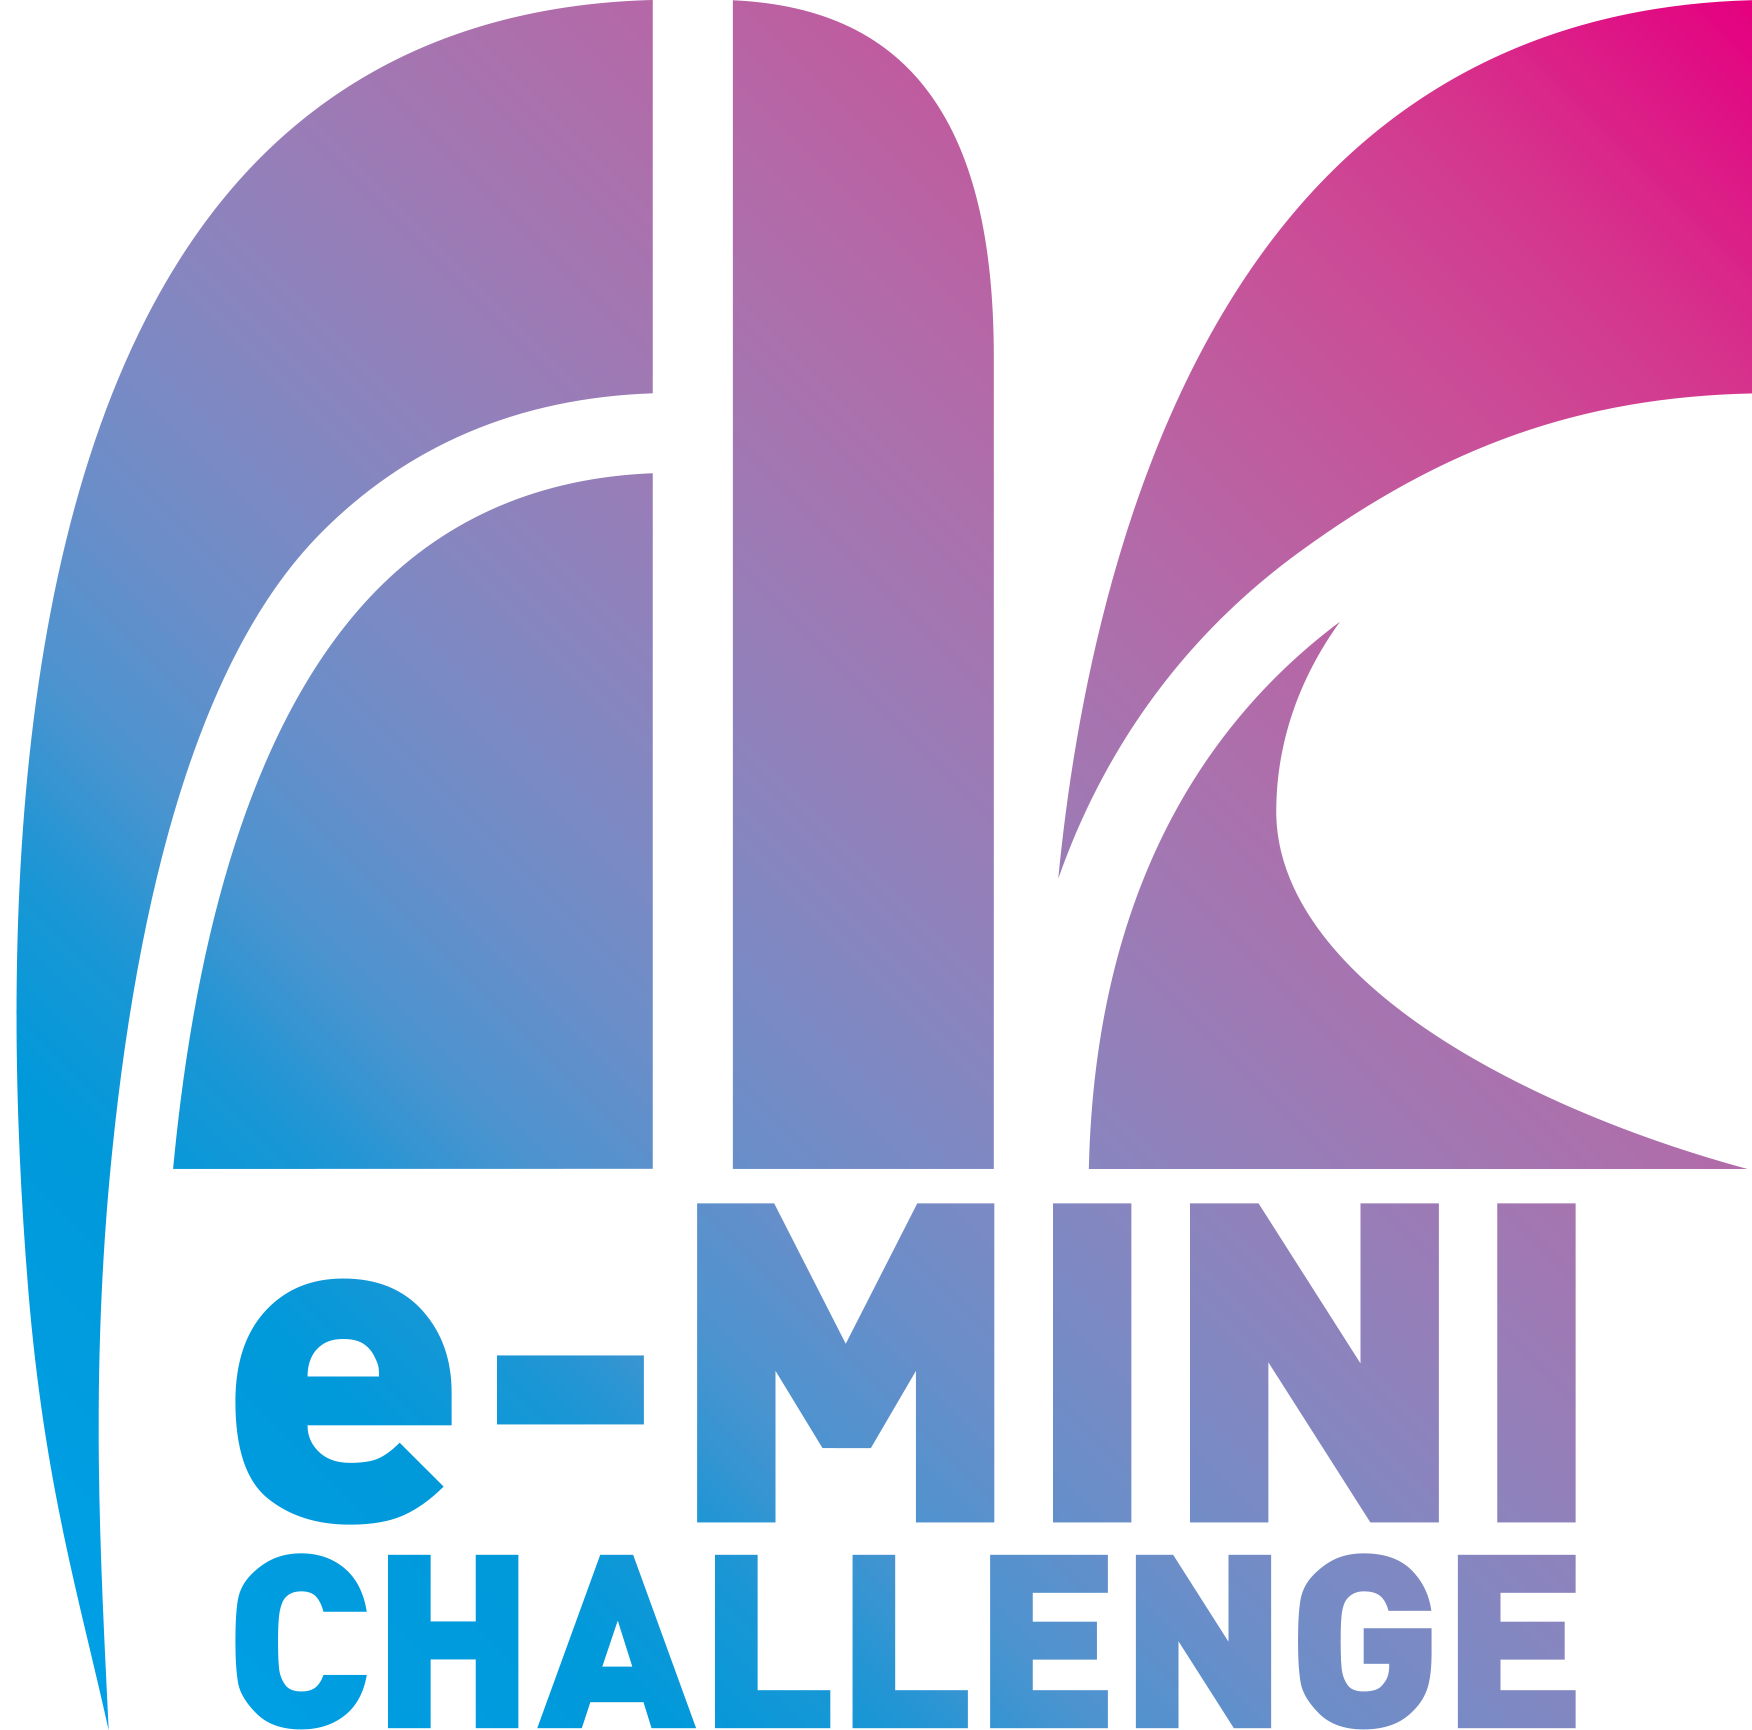 e-MINI CHALLENGE®2022 S2 Rd.3 ポイントランキング公開